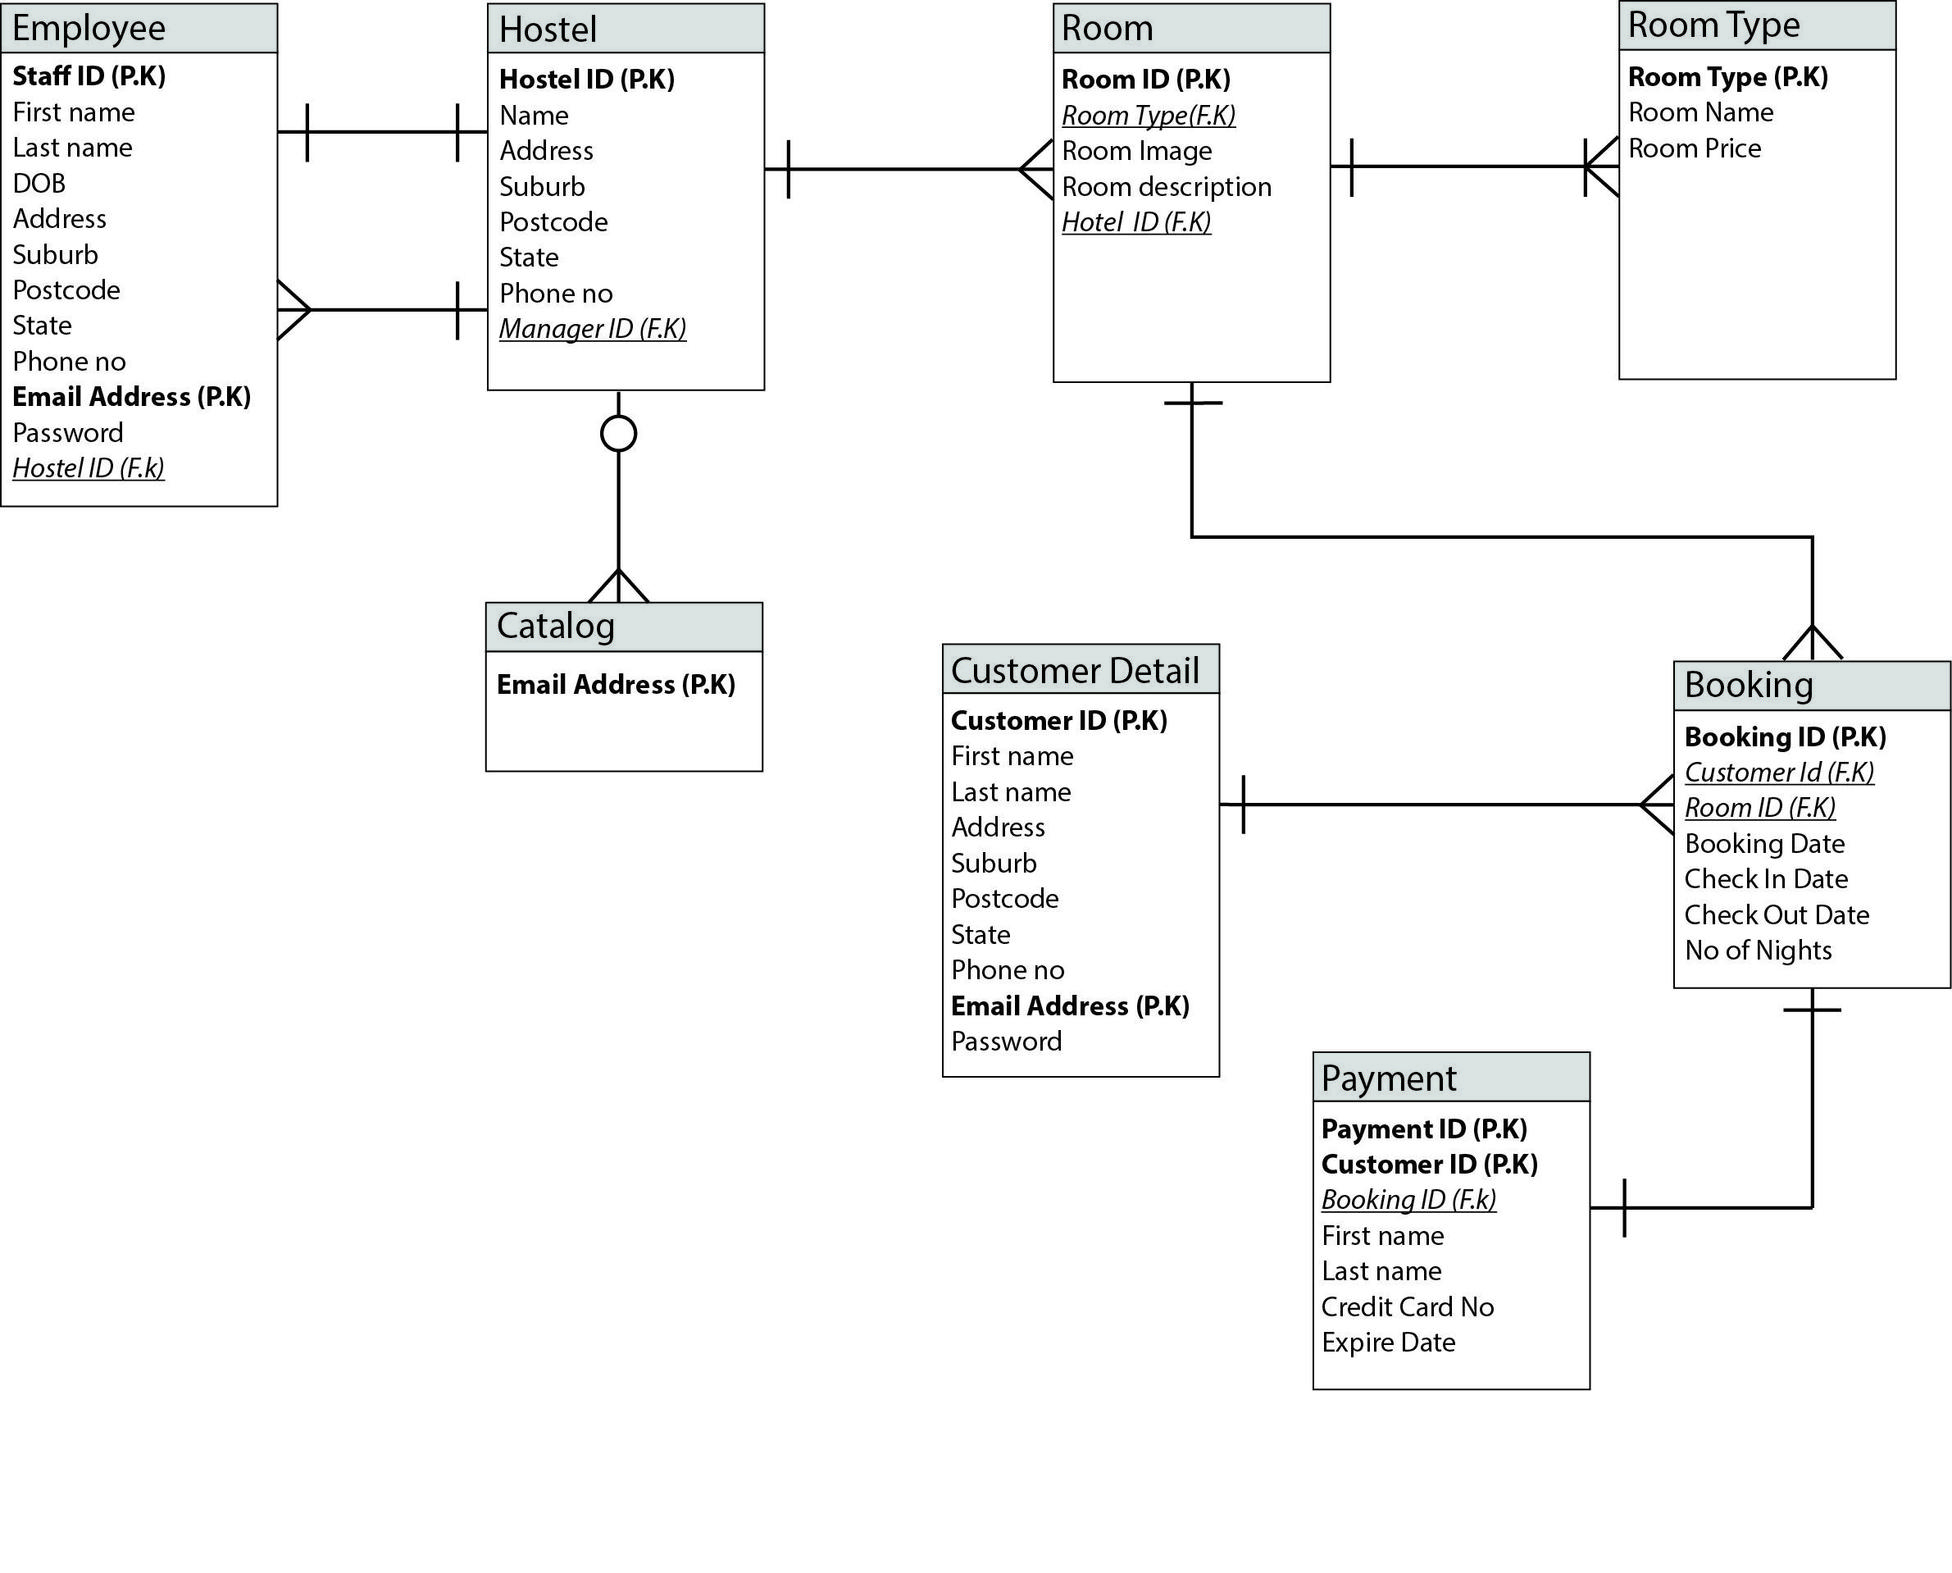 Diagram] Sequence Diagram For Hostel Management System Full